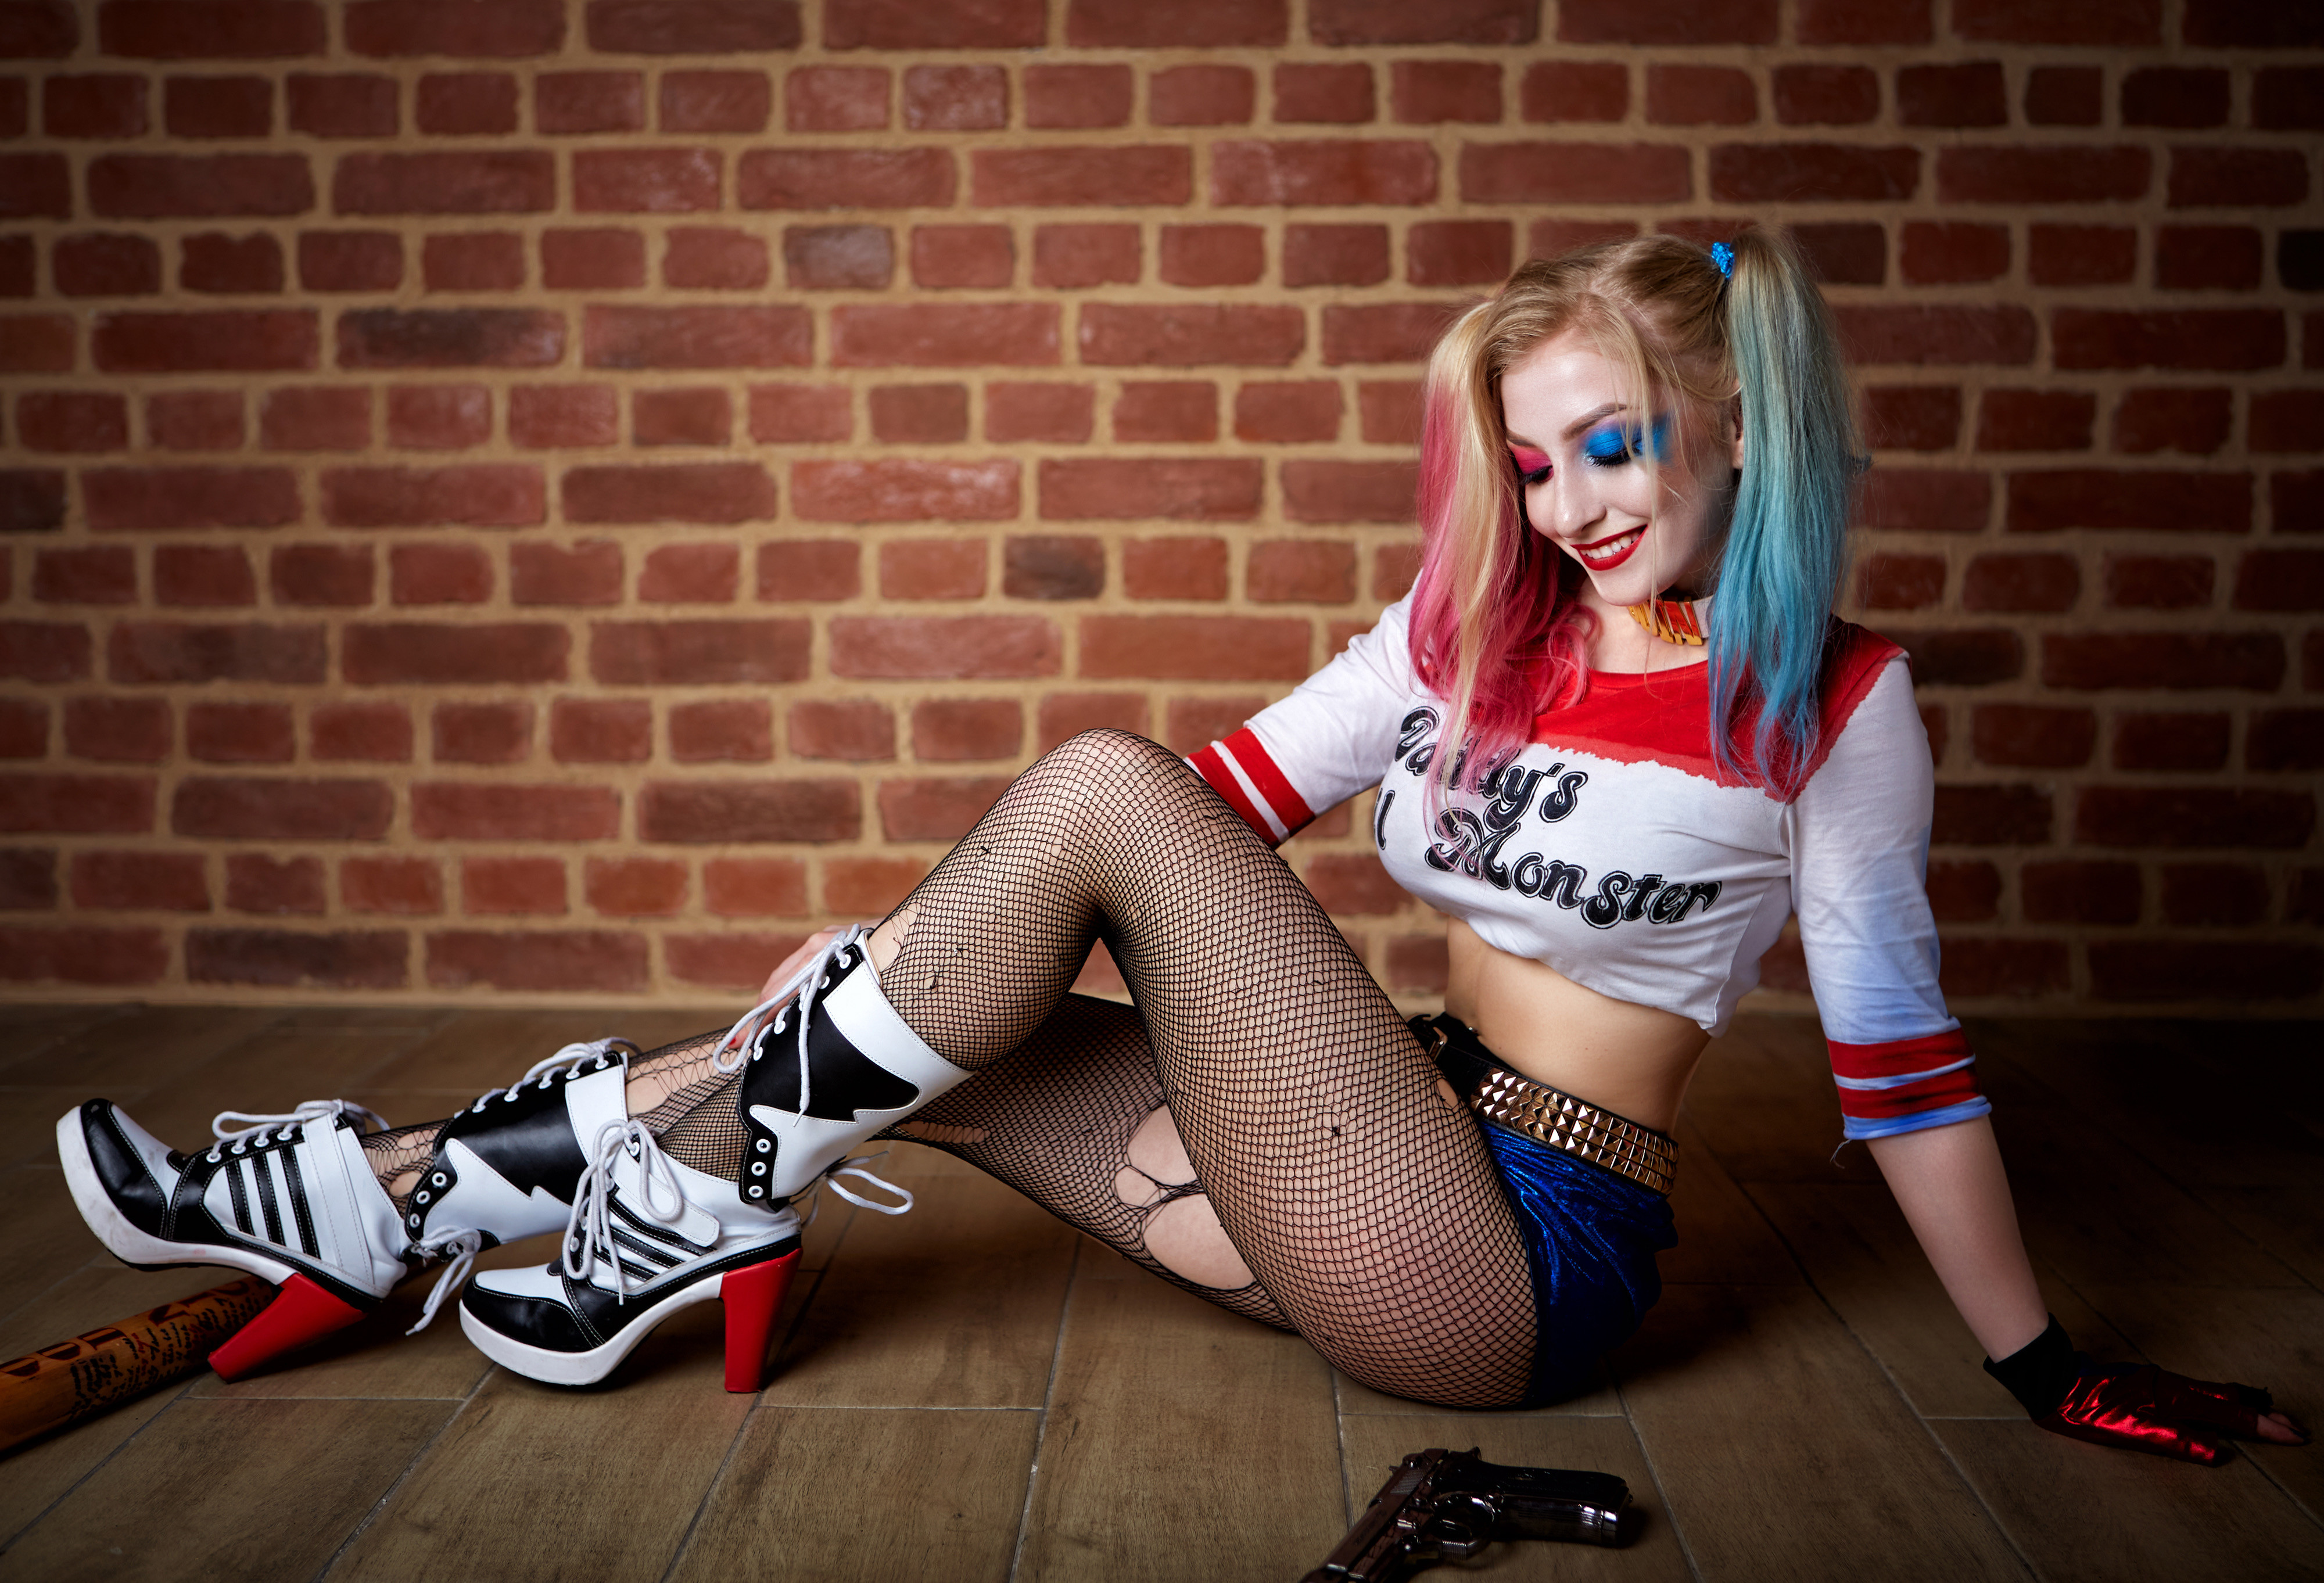 Harley quinn cosplay